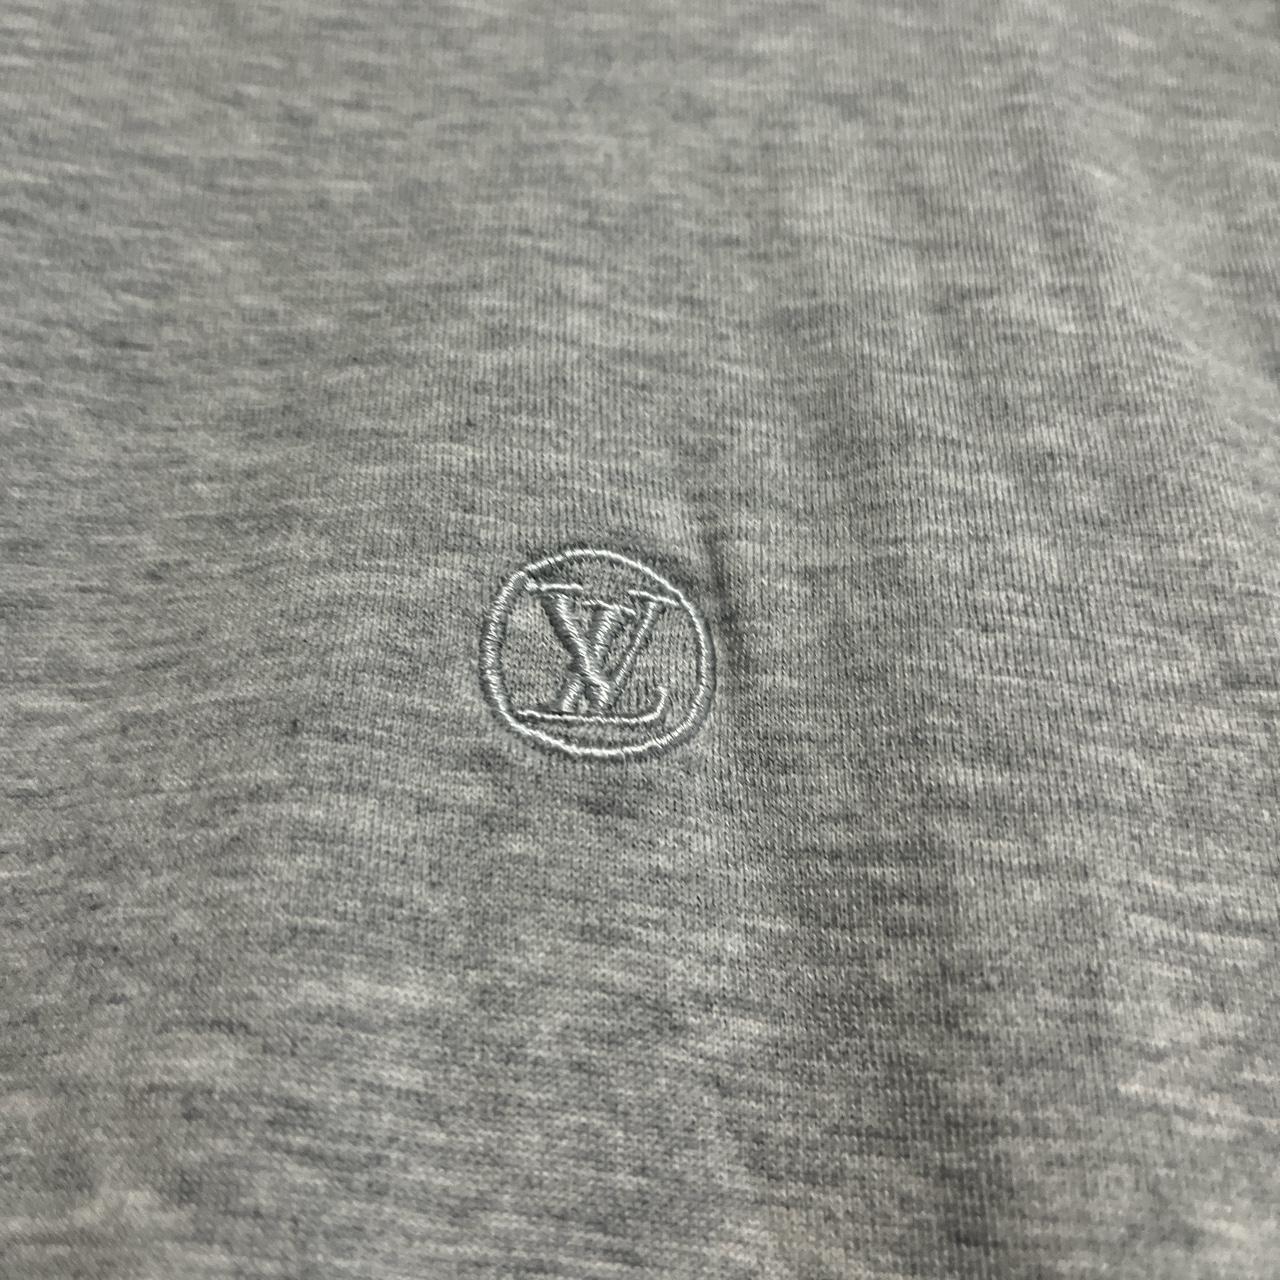 Louis Vuitton t-shirt. Doenst fit me so almost never - Depop